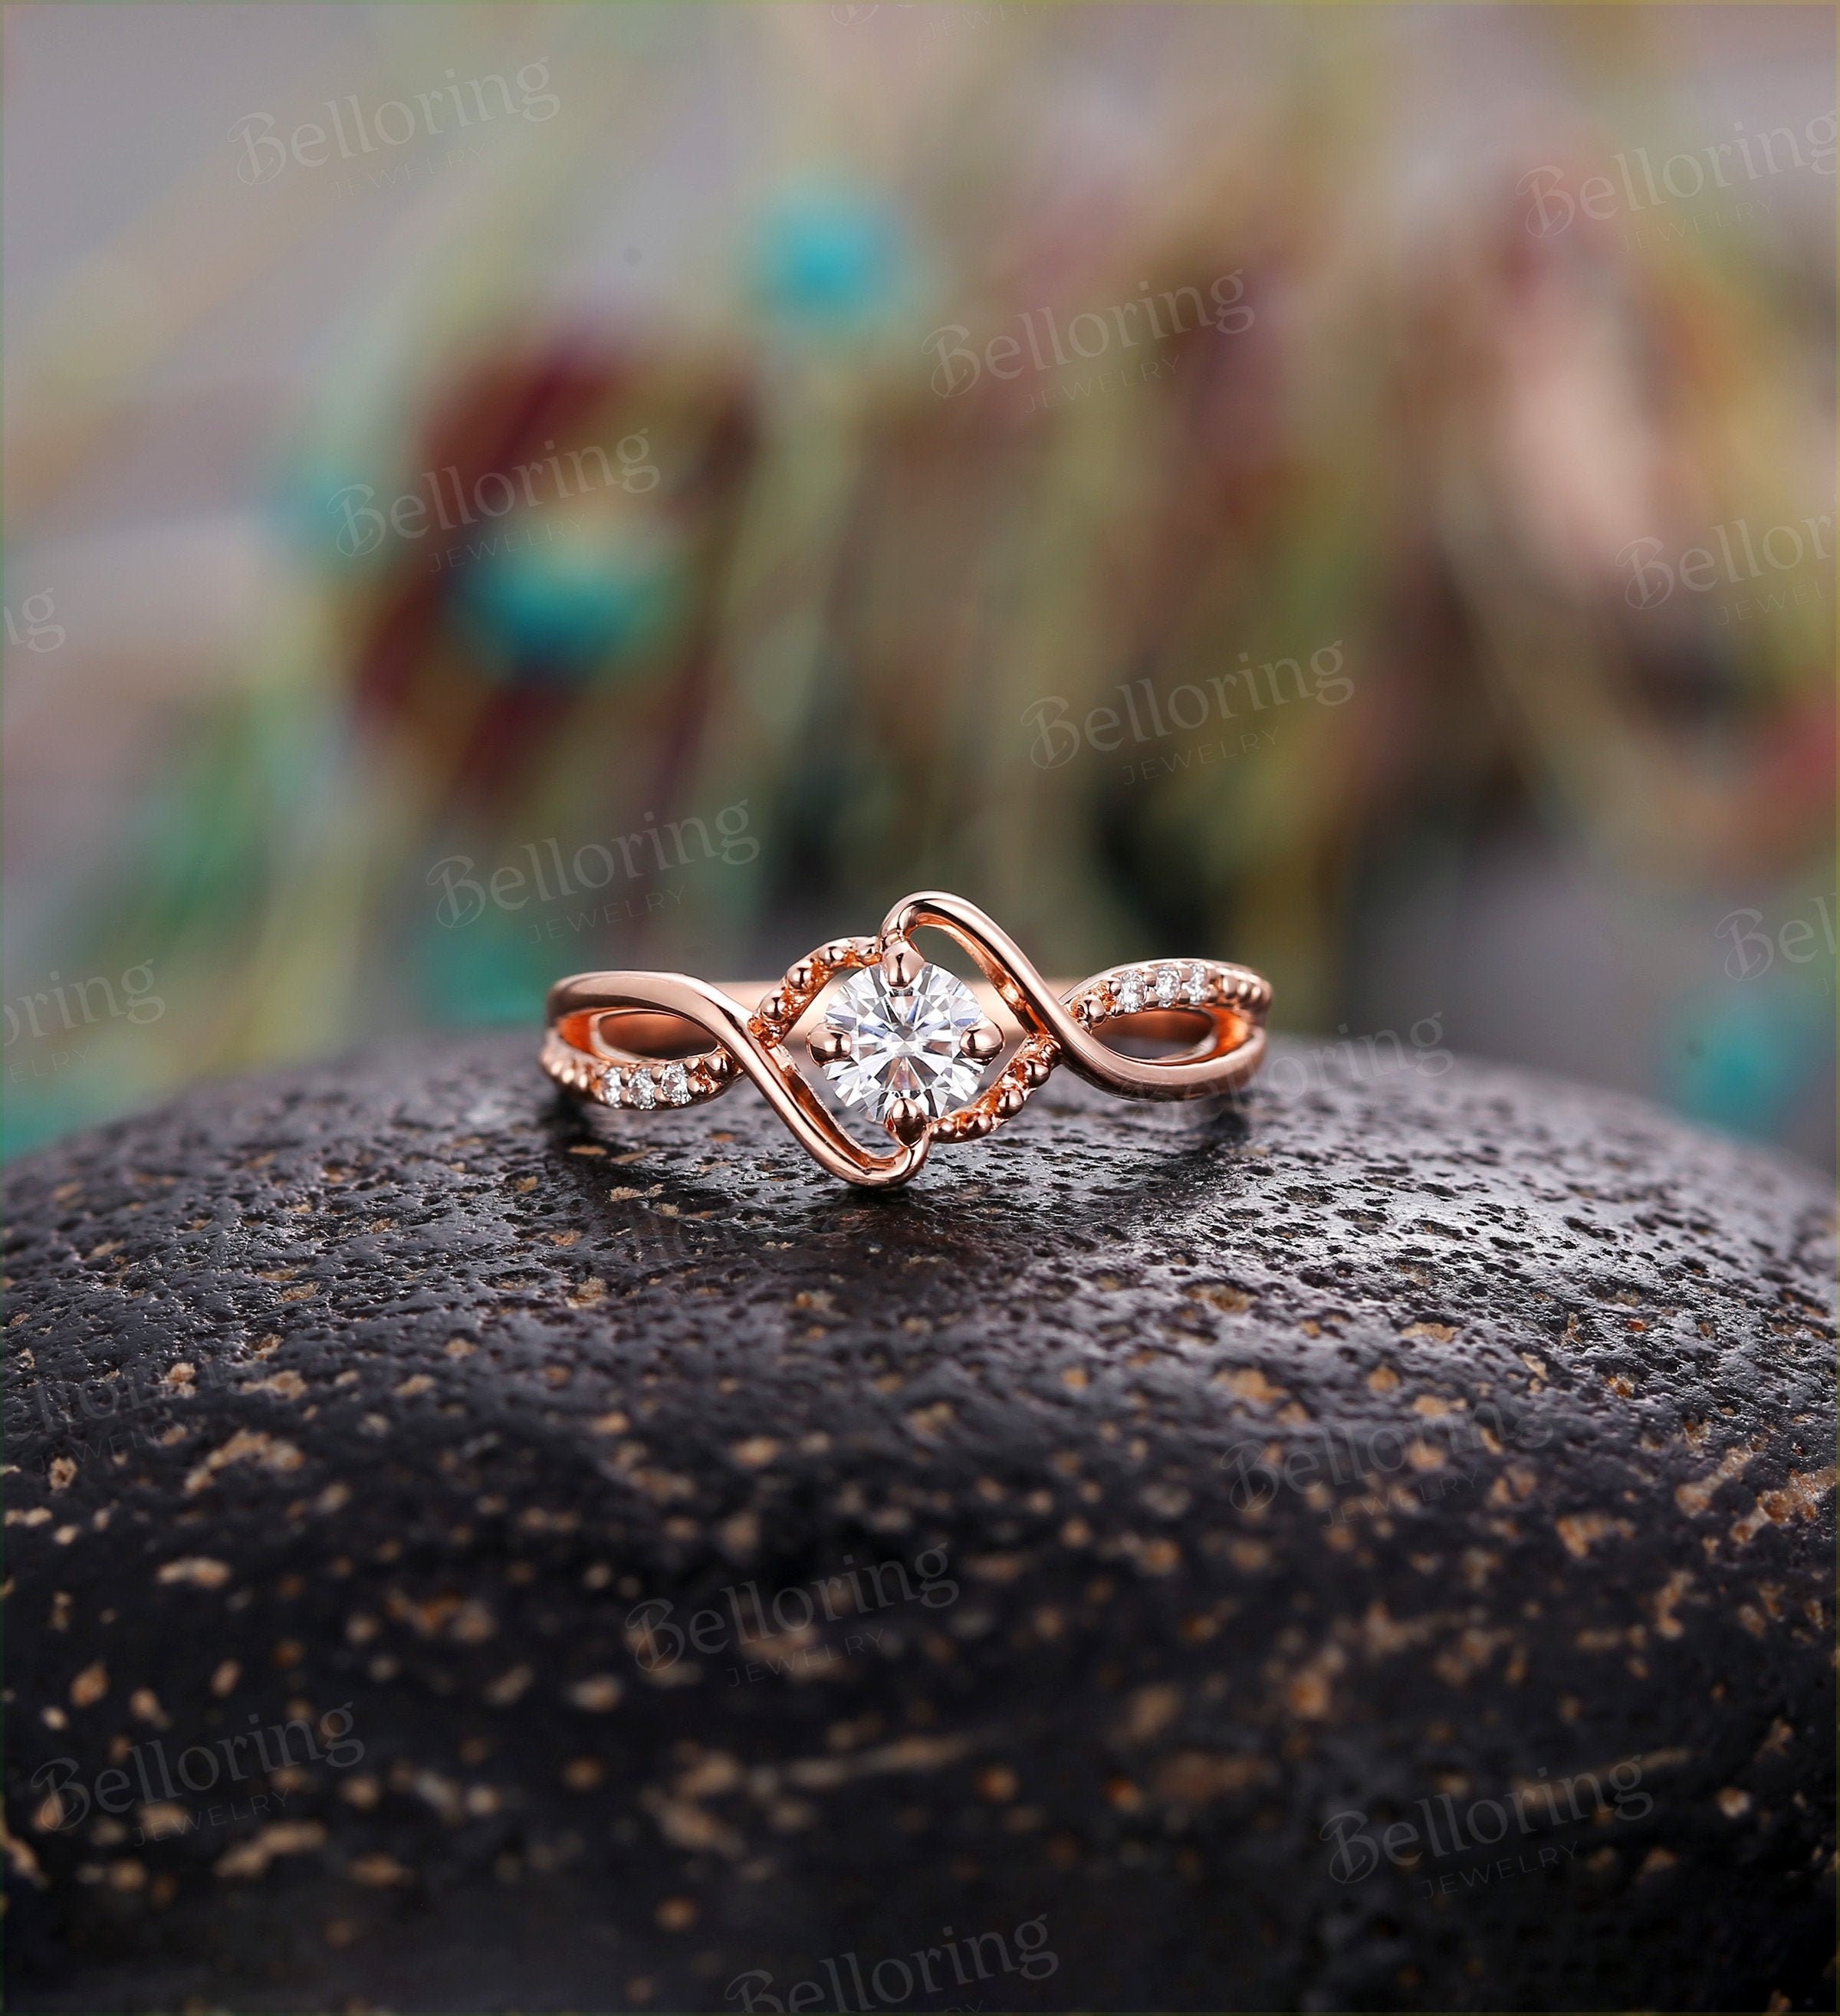 Anniversary Ring 2.15 CT Round Moissanite Diamond Bridal Sets Art Deco Bridal Set Vintage Wedding Ring Set Round Moissanite Ring Set